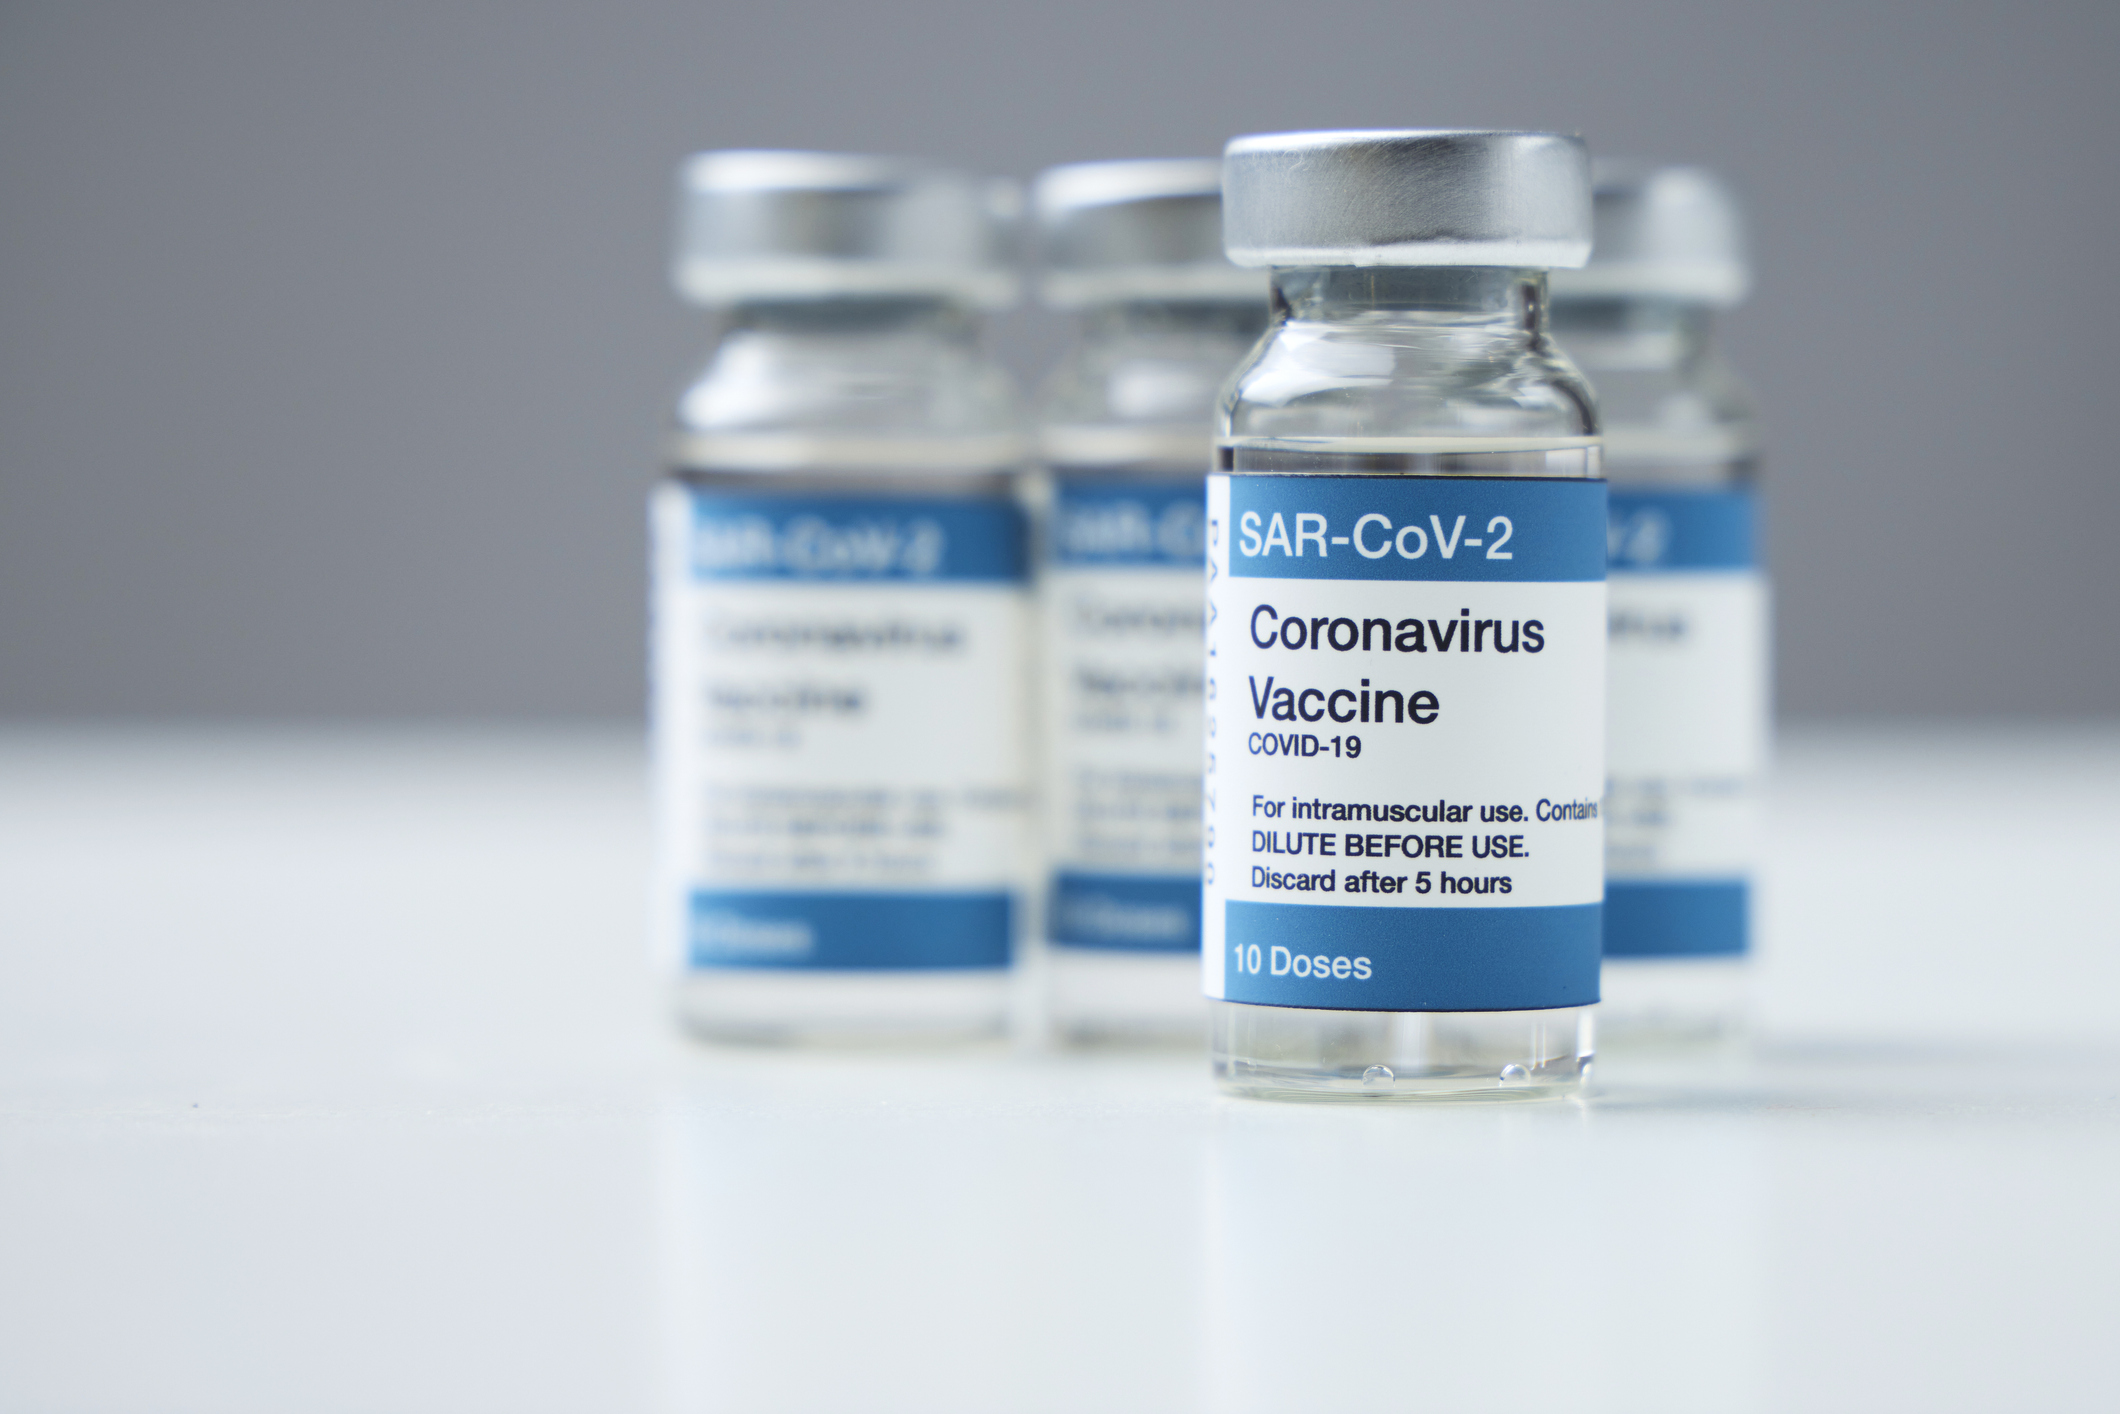 Four vaccine viles